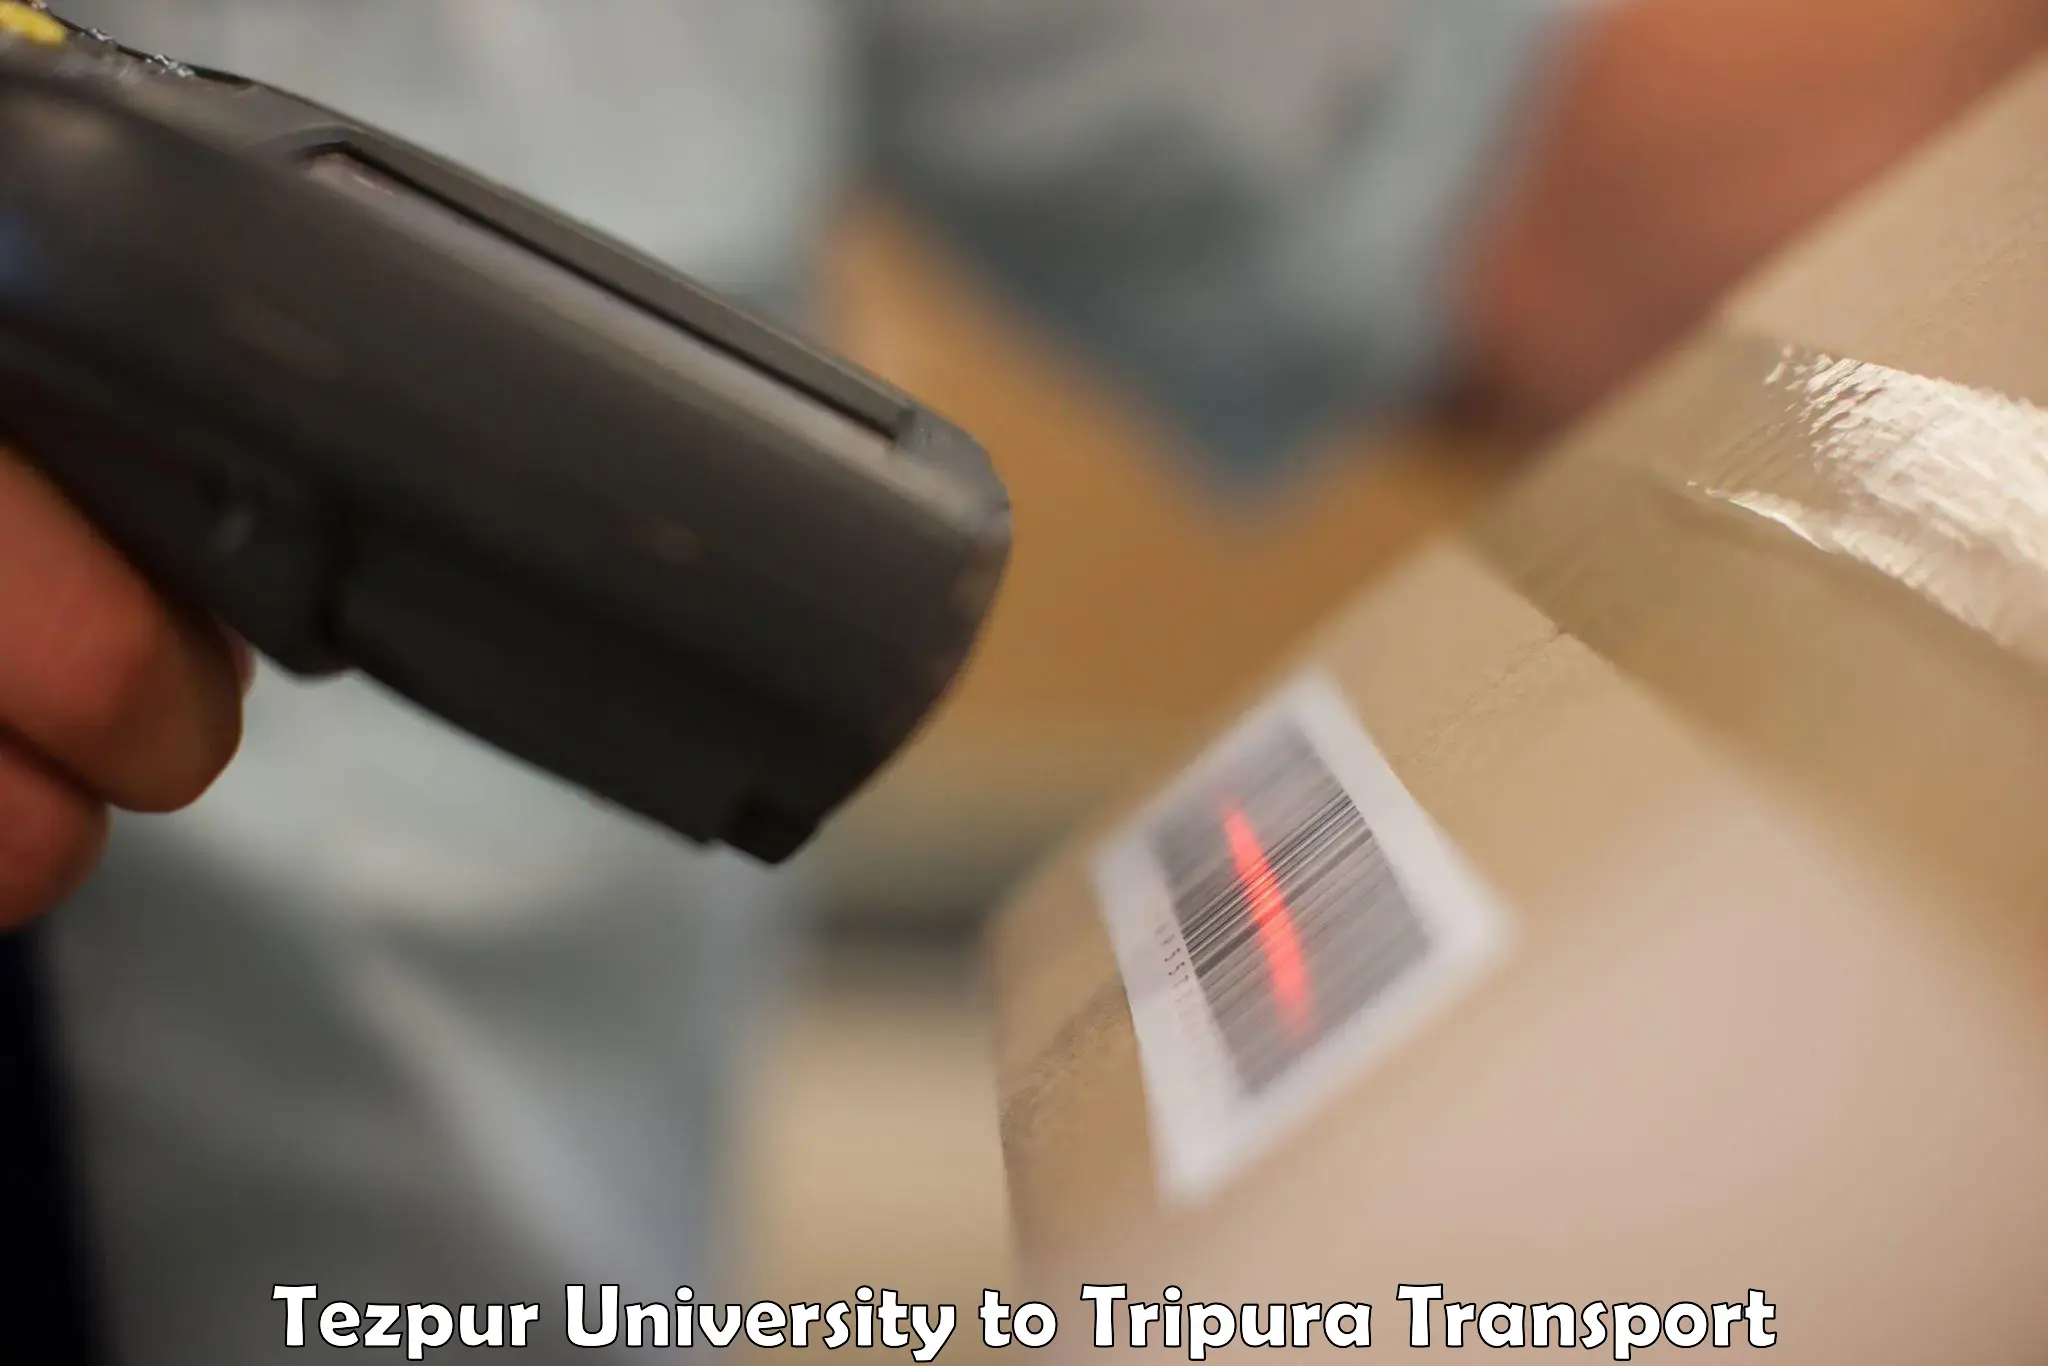 Cycle transportation service Tezpur University to Dhalai